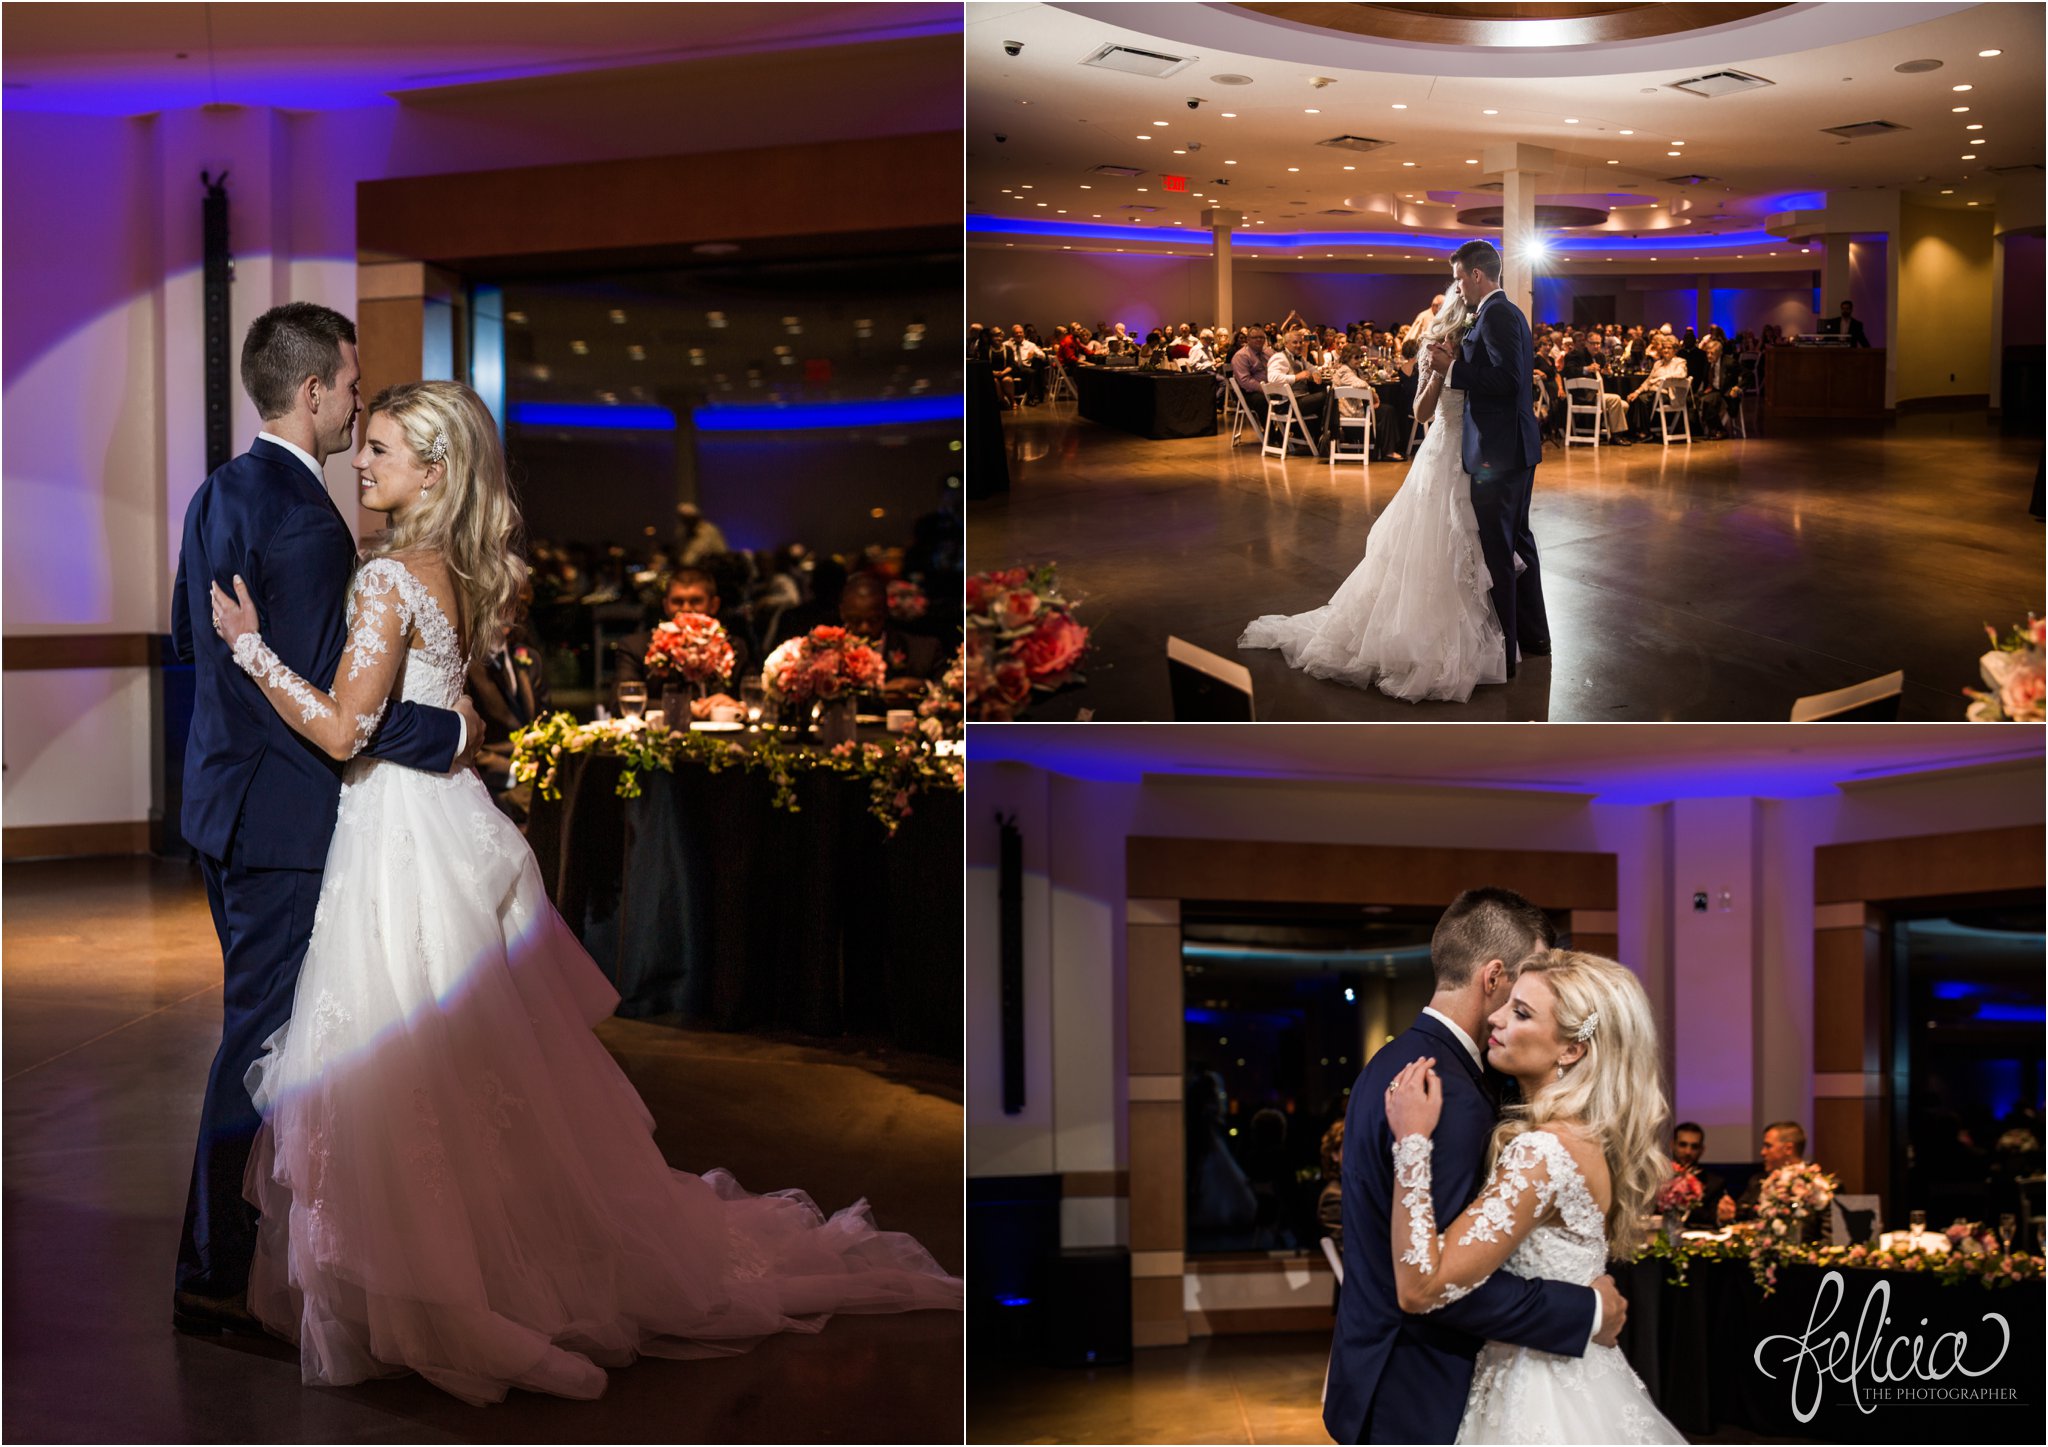 images by feliciathephotographer.com | wedding photographer | kansas city | redemptorist | classic | royal room | reception | details | first dance | lace long sleeve dress | navy suit | romantic | 